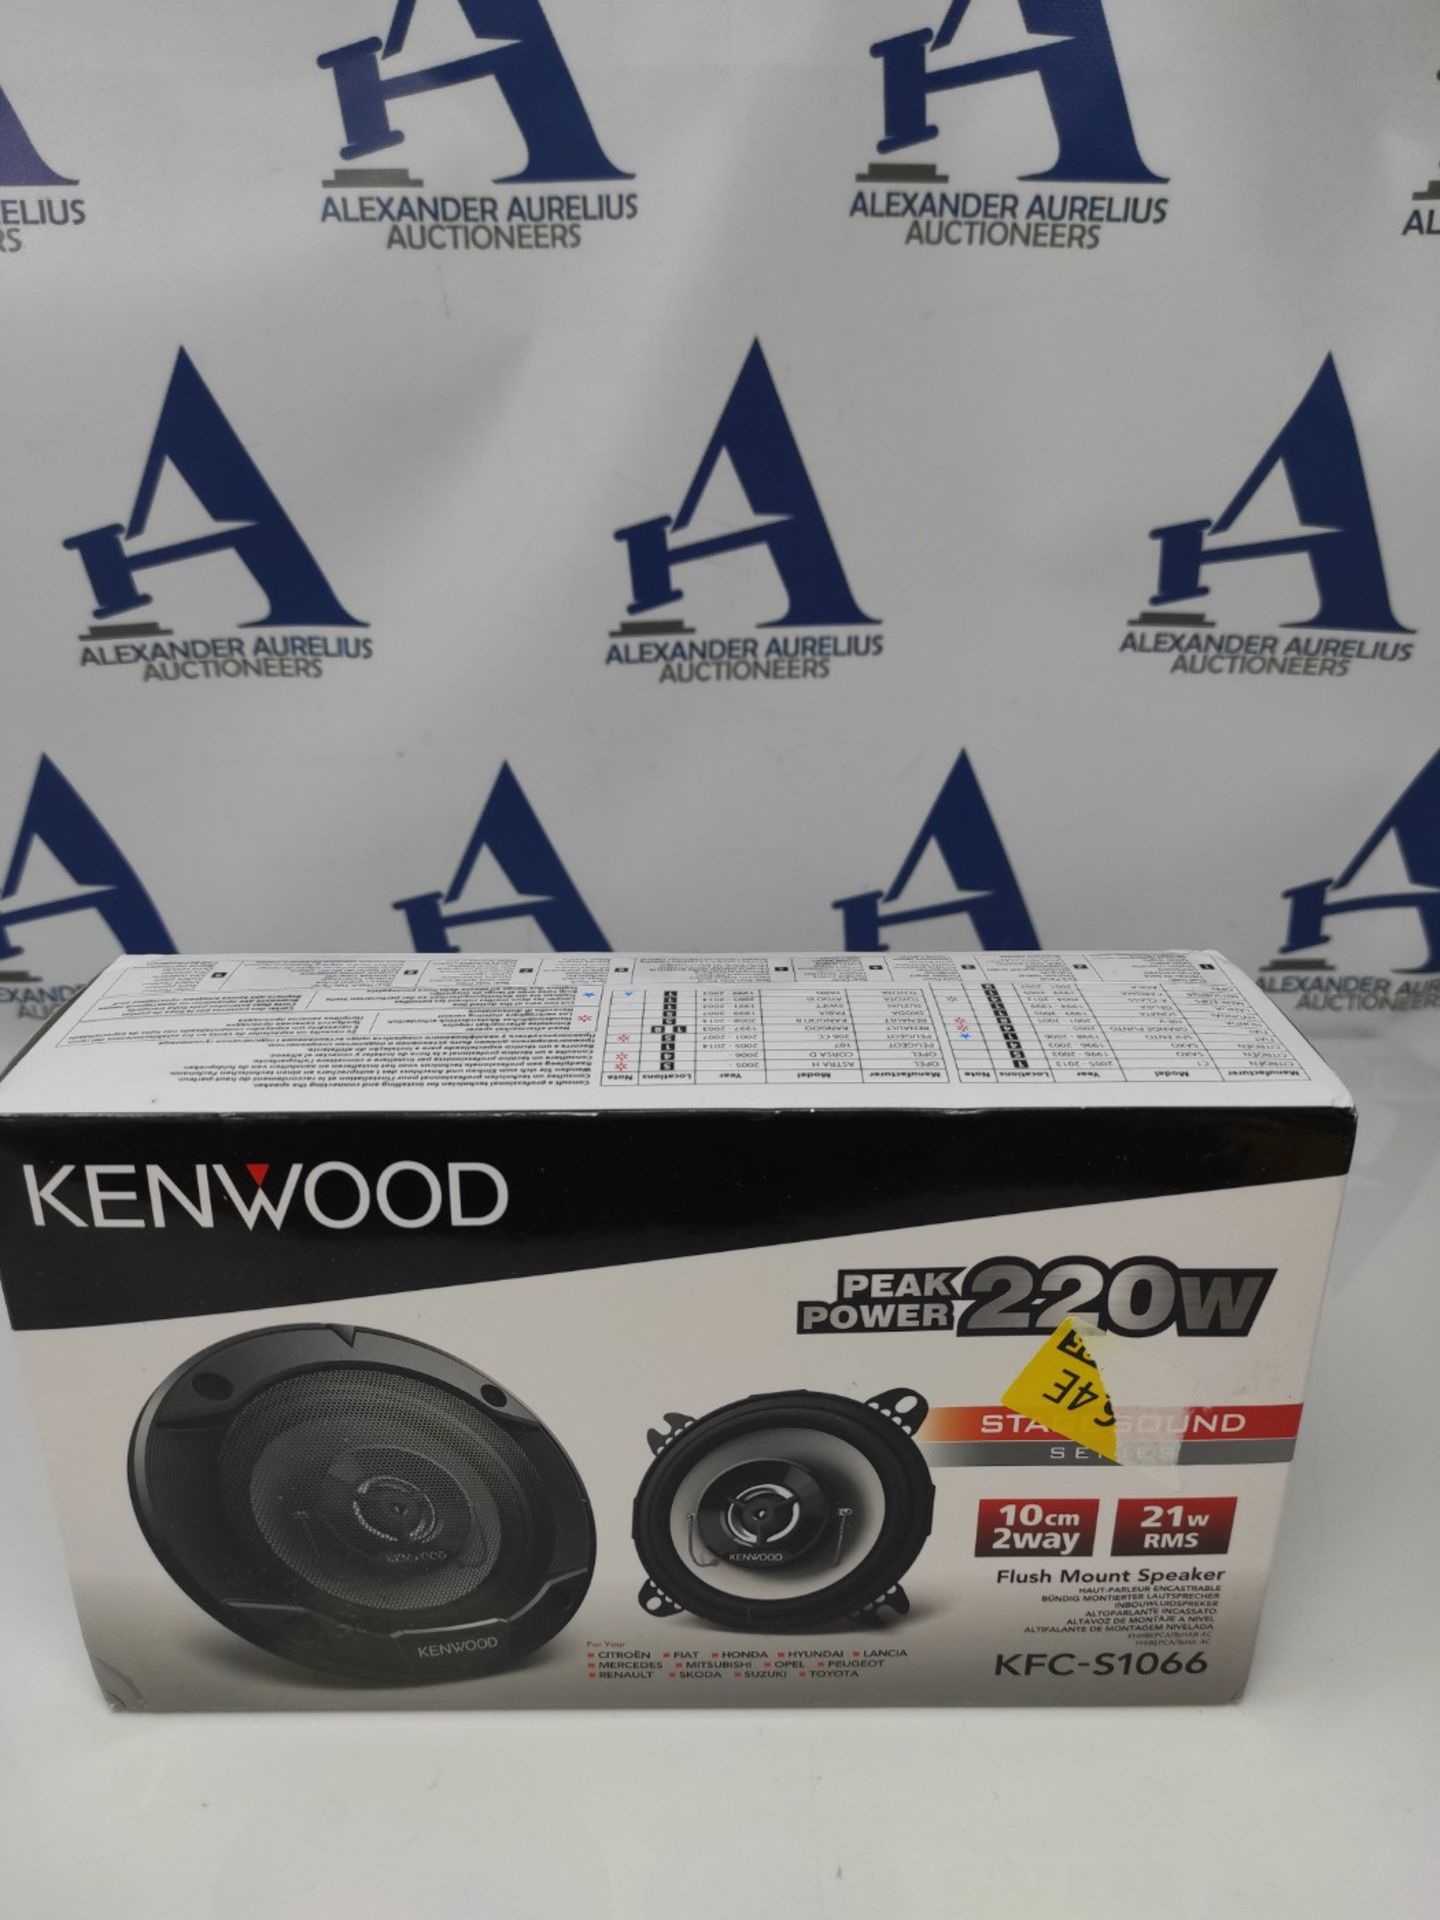 Kenwood, KFC-S1066 Stage Sound series 2-way speaker system, Peak power 220W, flush mou - Image 2 of 3